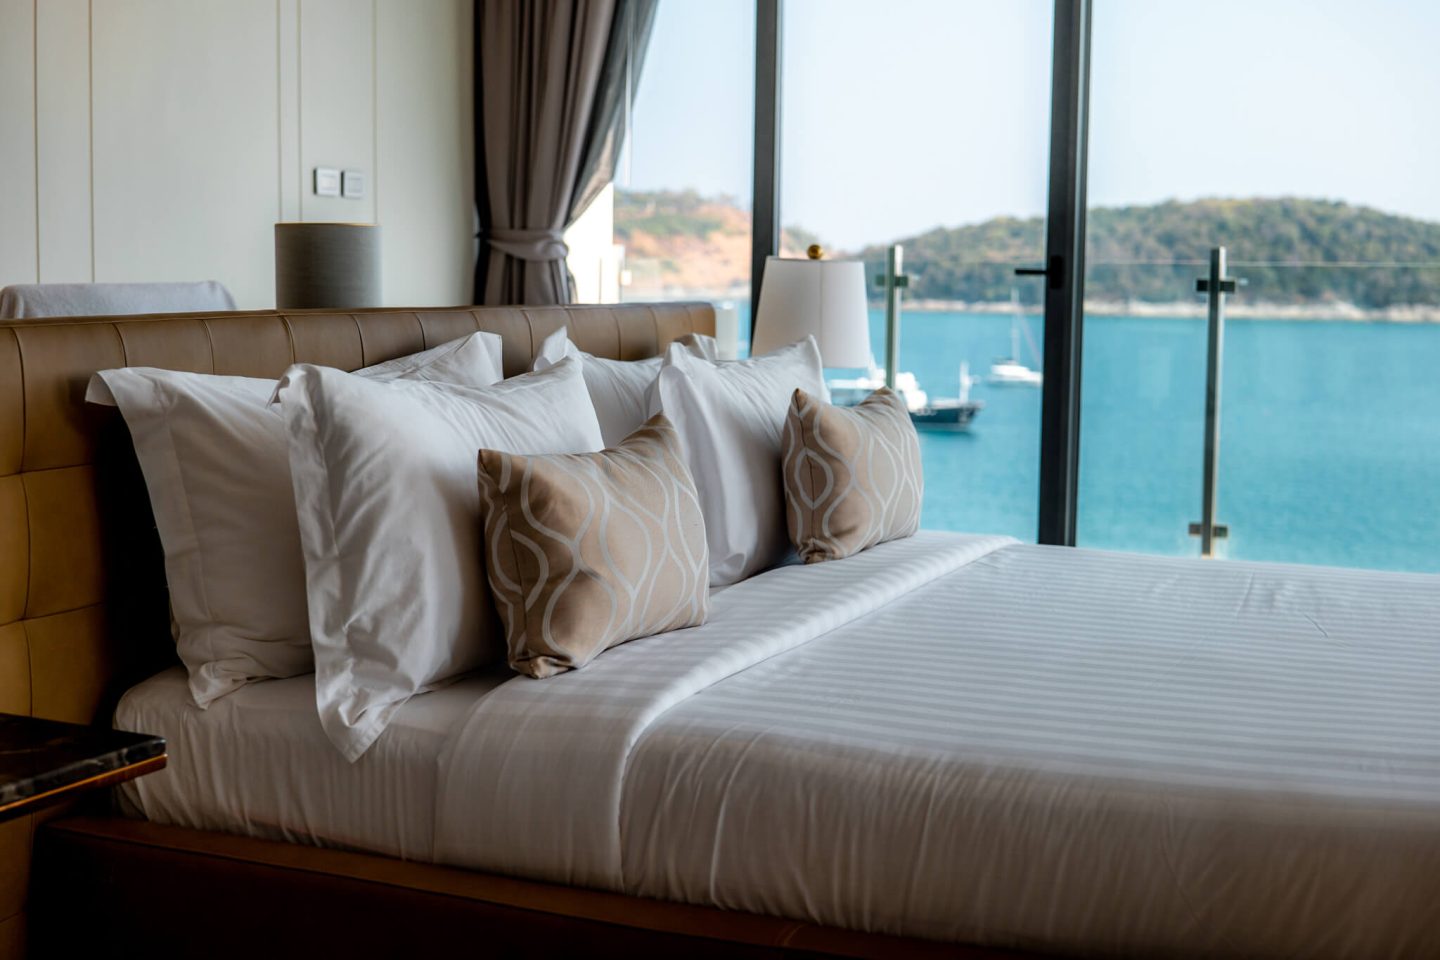 Inspiring Villas sea view villa taken from the bedroom with bed beside window overlooking the sea